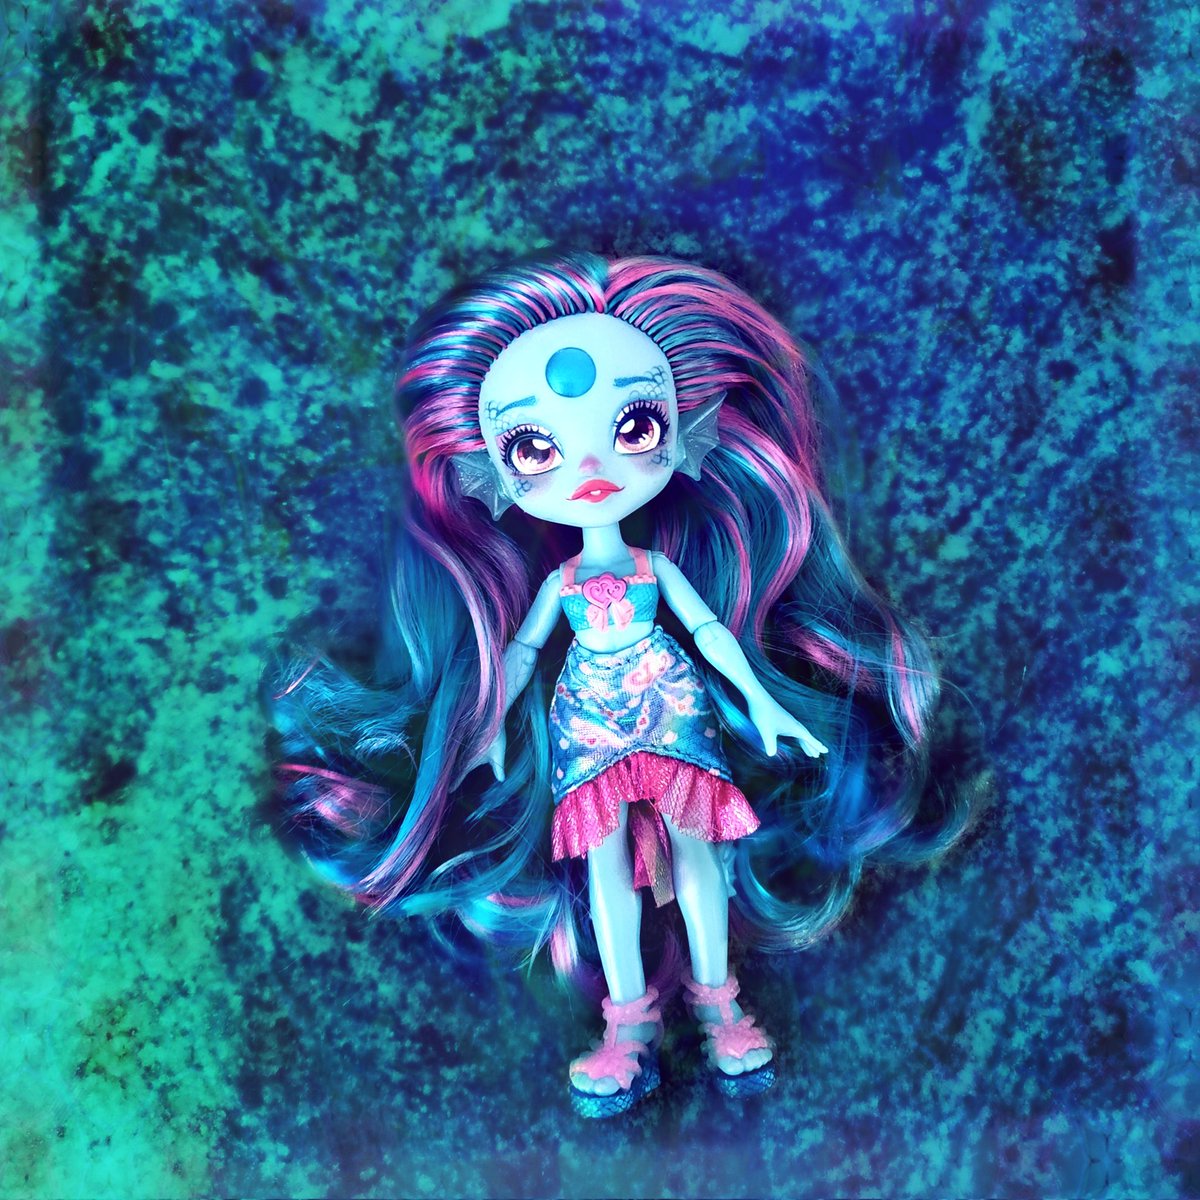 📸 Look who's taking a swim! 🔭 It's mermaid Pixling Marena! 🧜‍♀️ 🧚‍♀️💦🌊🐠🐟💙💕
#moosetoys #supermoosetoys #magicmixies #magicmixiespixlings #marena #mermaid #dolls #dollcollecting #dollcollector #fashiondolls #kawaii #cute #photography #photoedit #magicmixlingspixlings #toy #toys